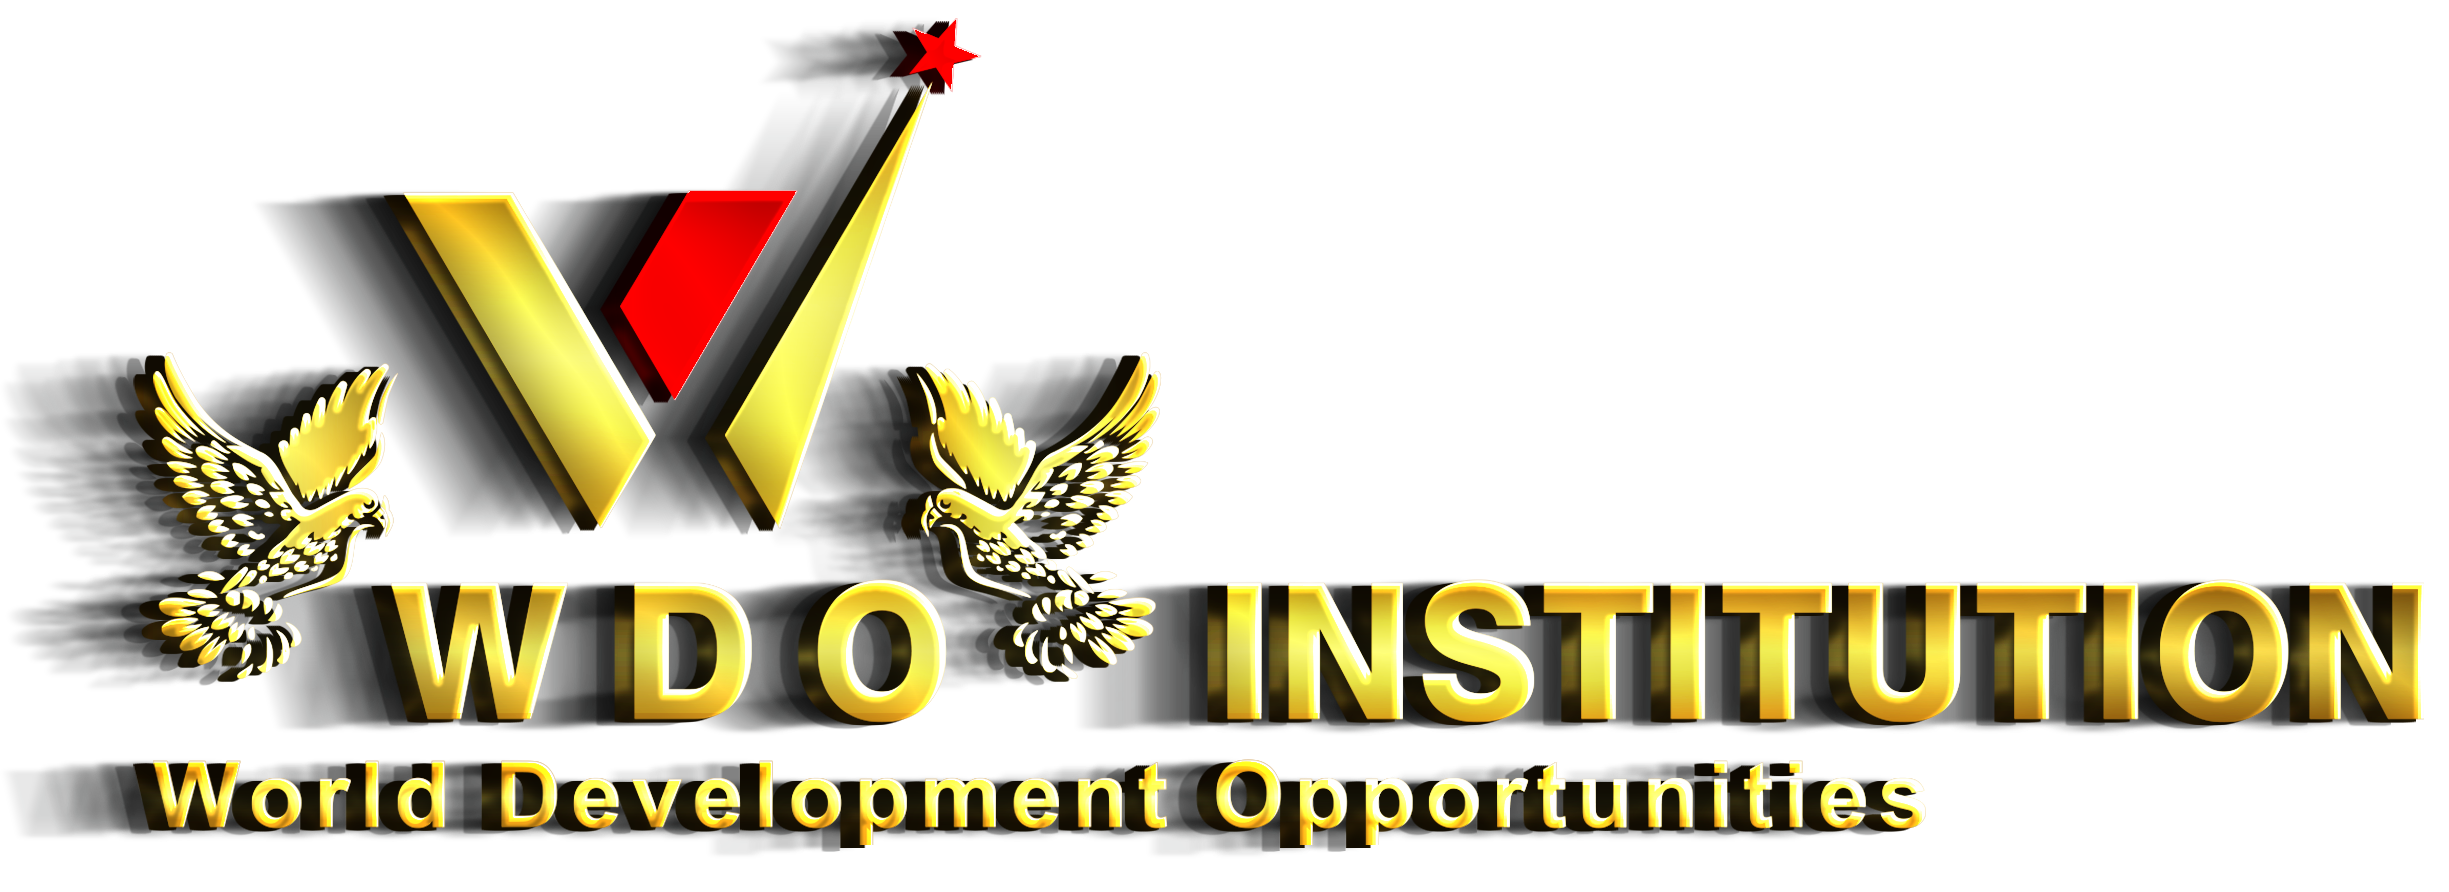 WDO Institution | World Developement Opportunities